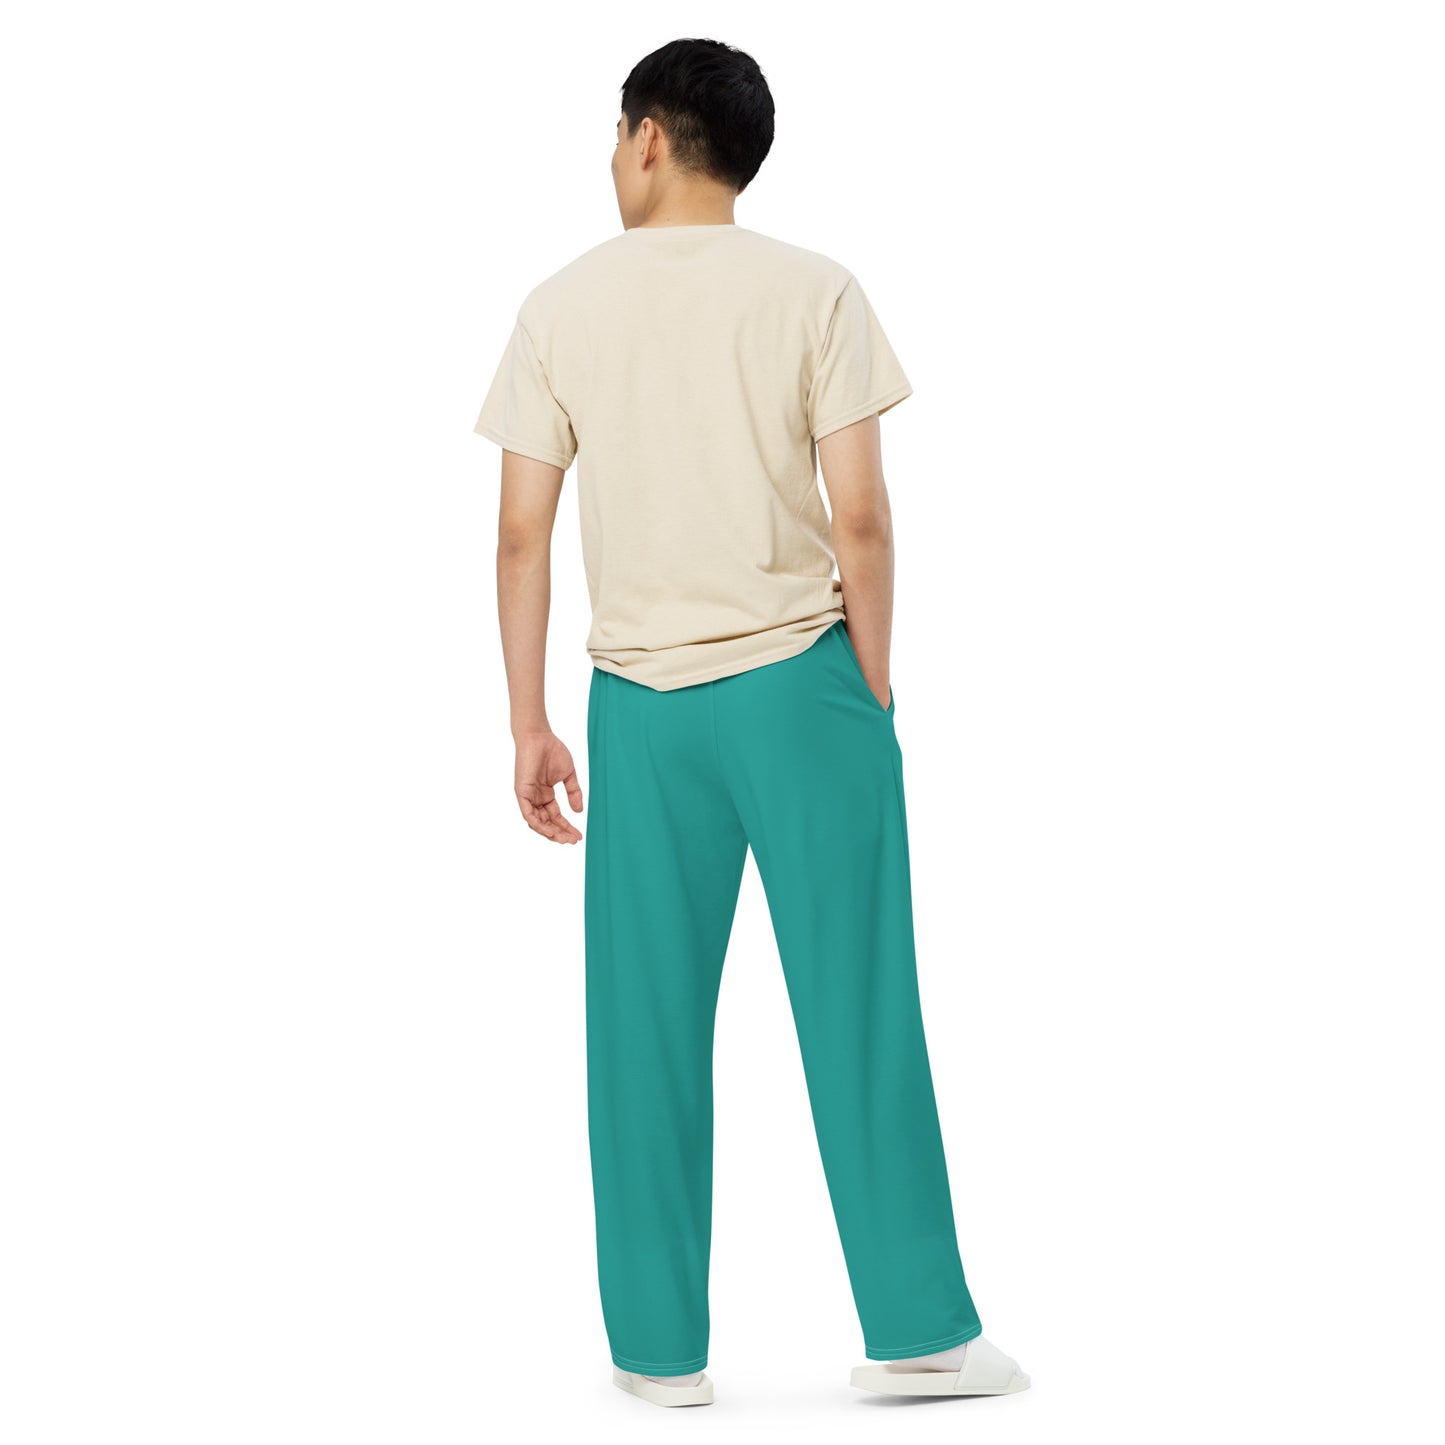 Aqua Blue unisex wide-leg pants, Casual summer pants